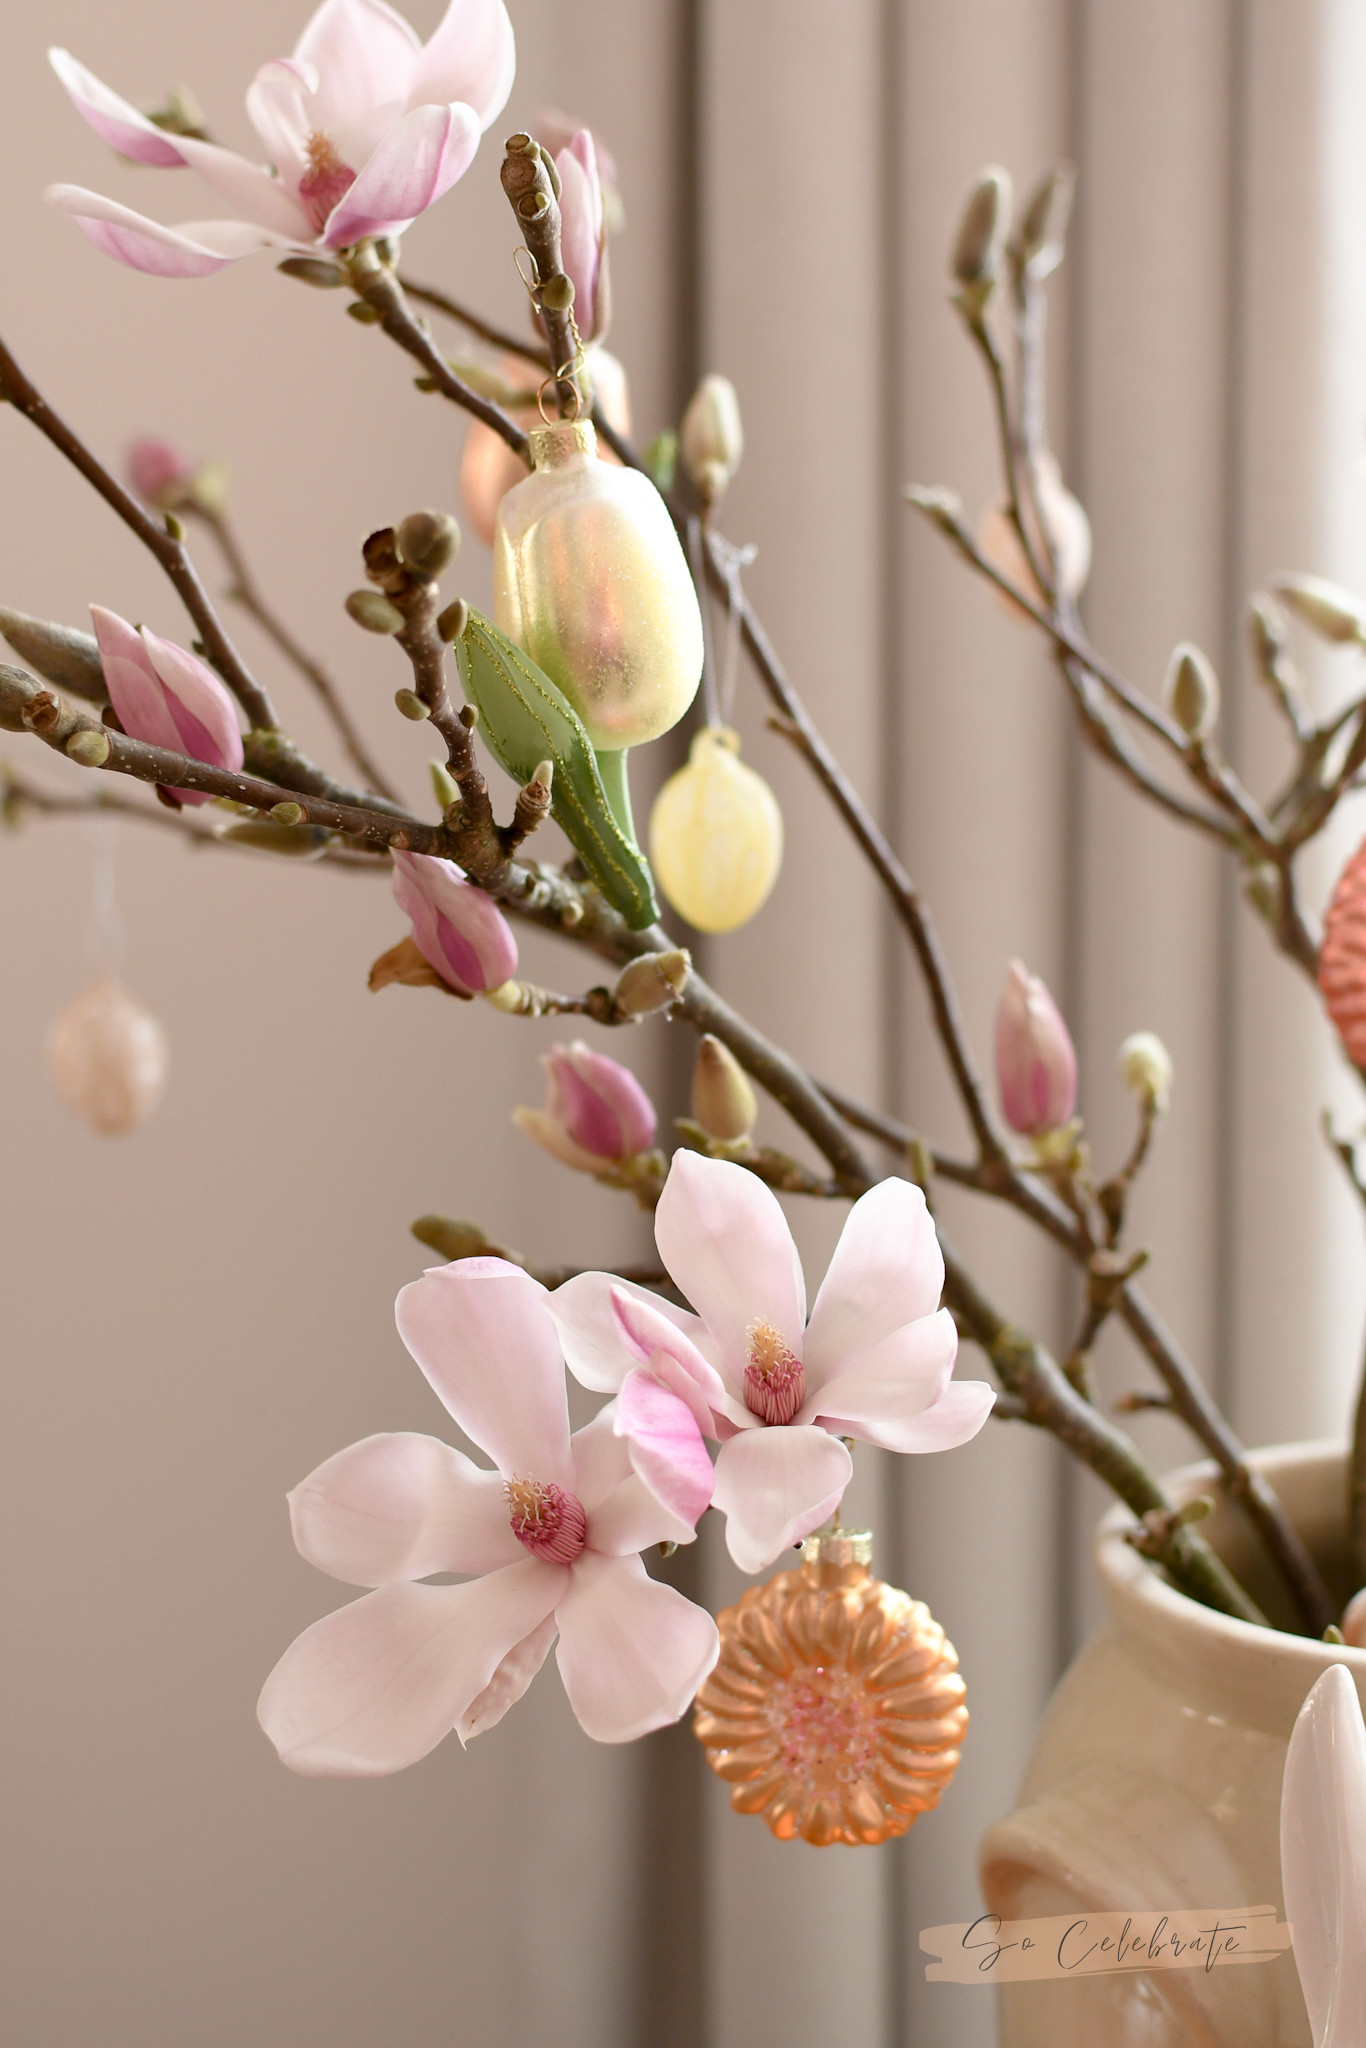 magnolia paastakken in vaas